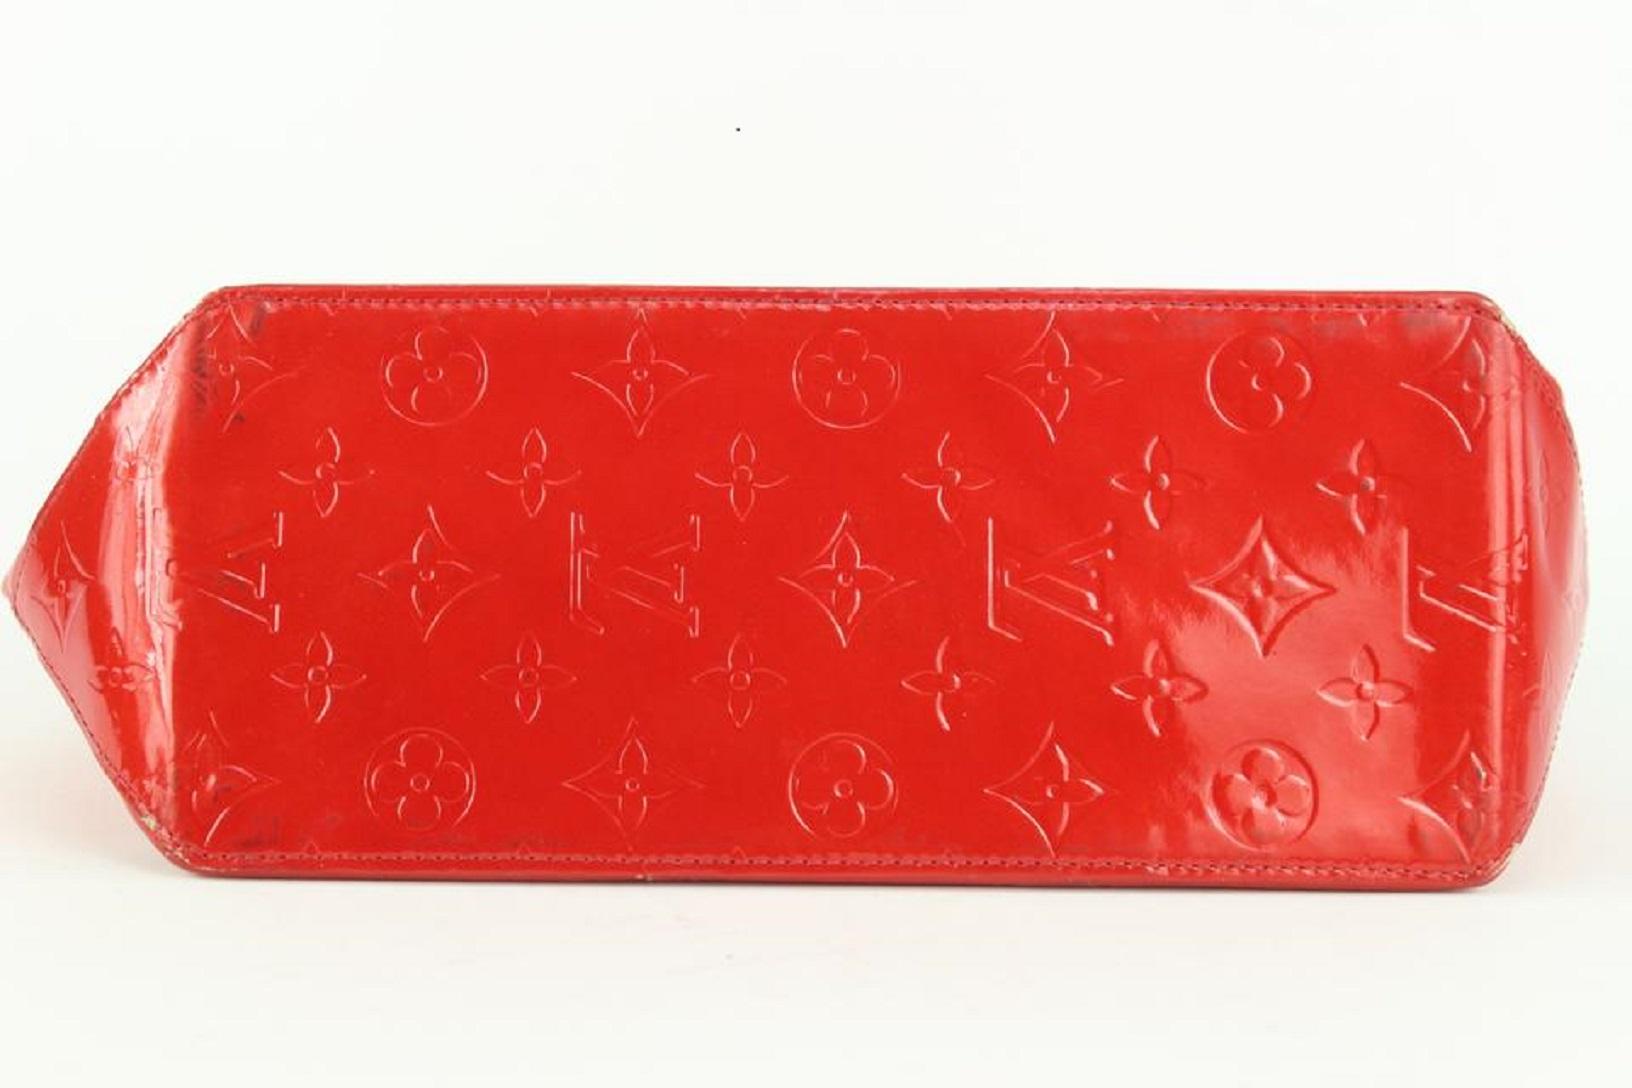 Louis Vuitton Red Monogram Vernis Reade MM Tote Bag 4LV106 2